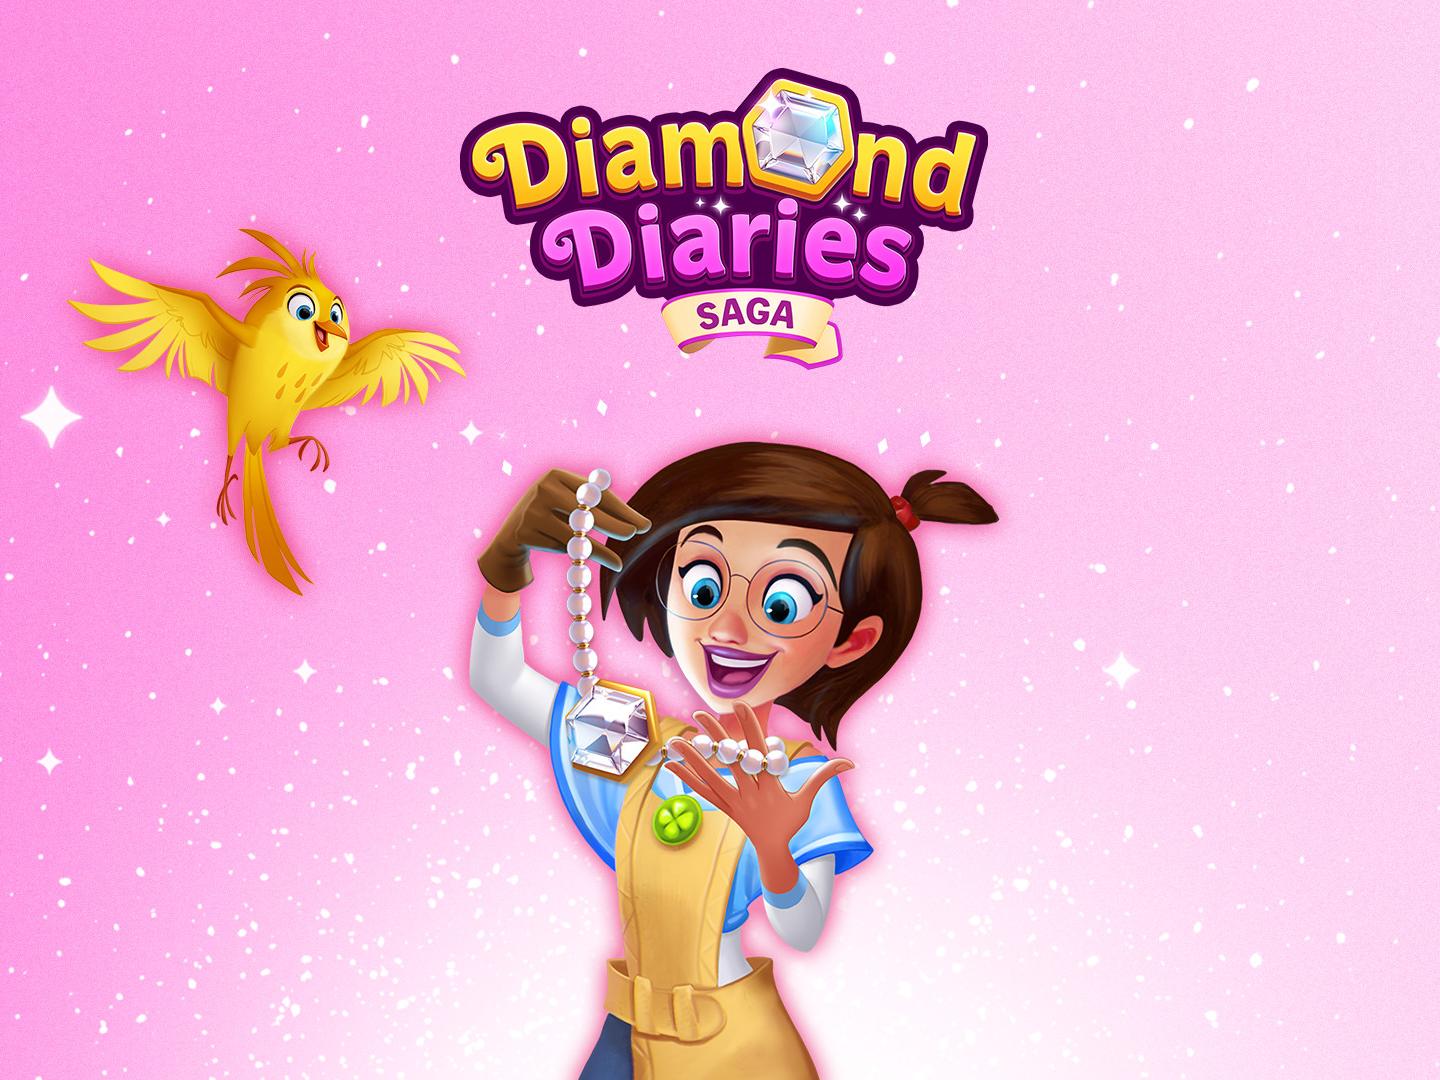 UI For King's mobile game: Diamond Diaries Saga